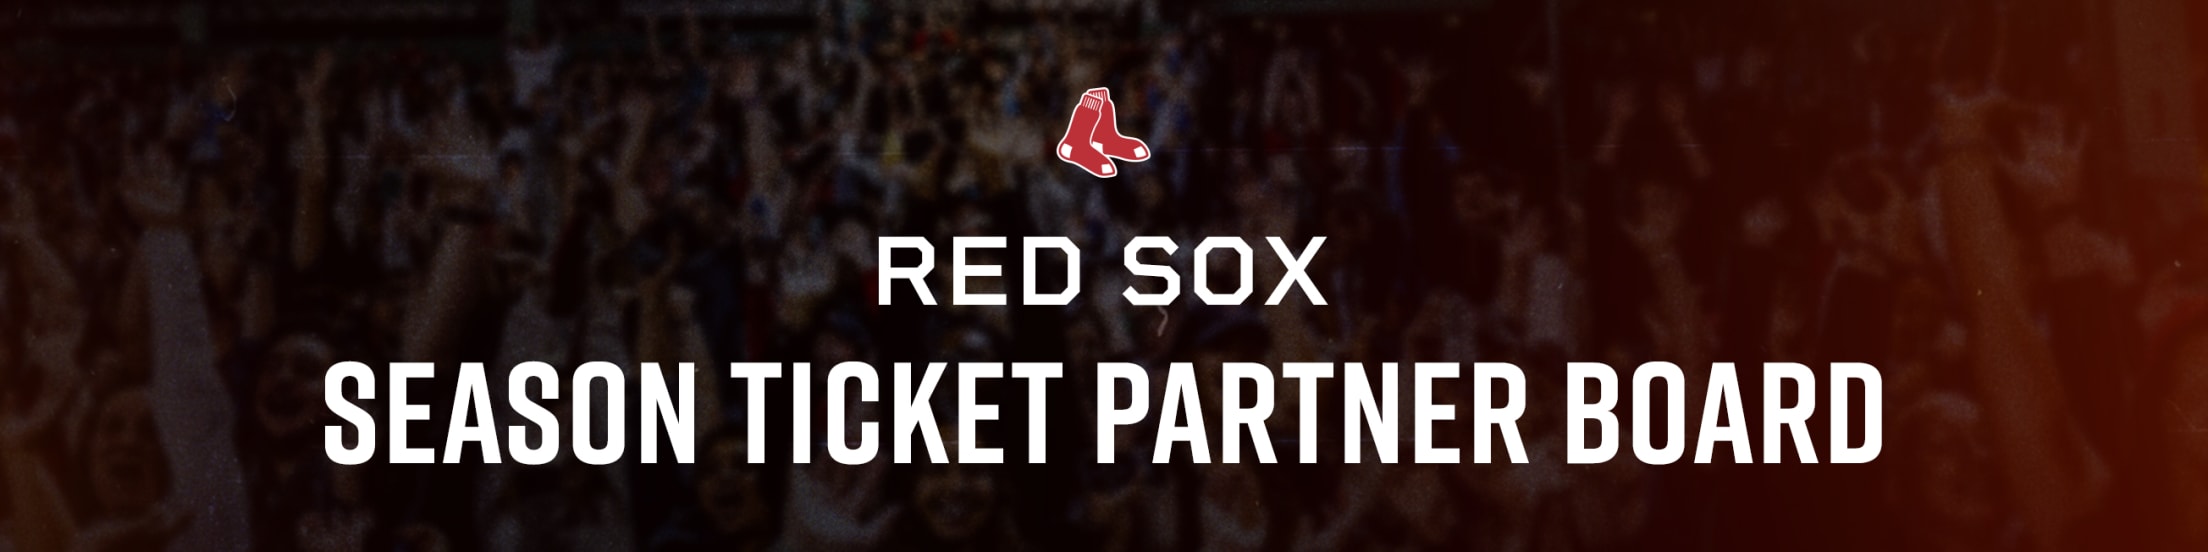 Redsox season tickets  Season ticket, Red sox tickets, Boston red sox